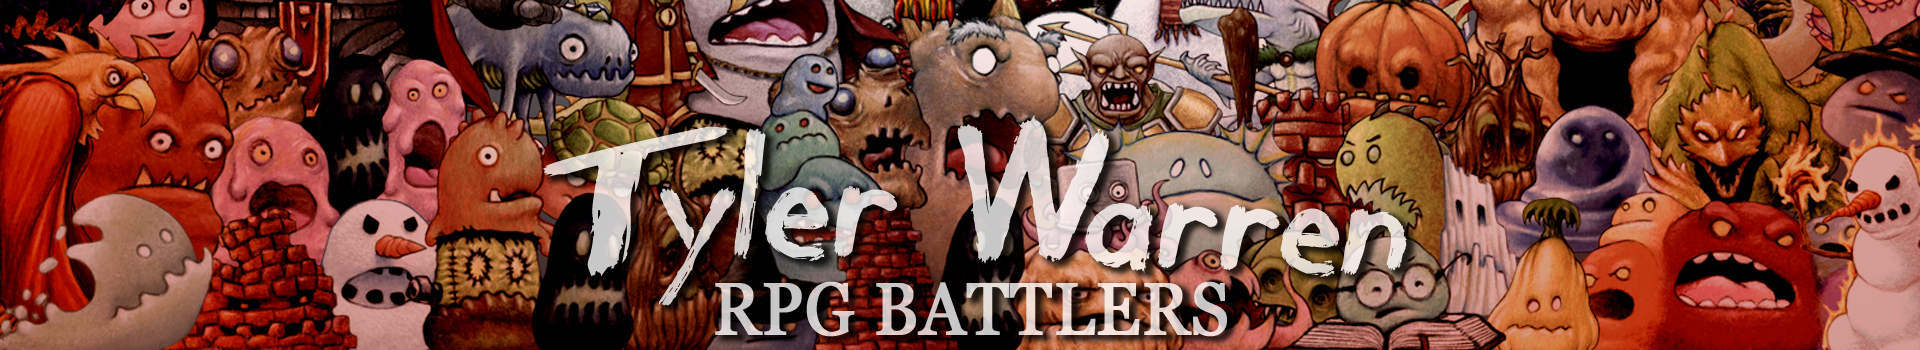 Tyler Warren RPG Battlers - 1st 50 Monsters